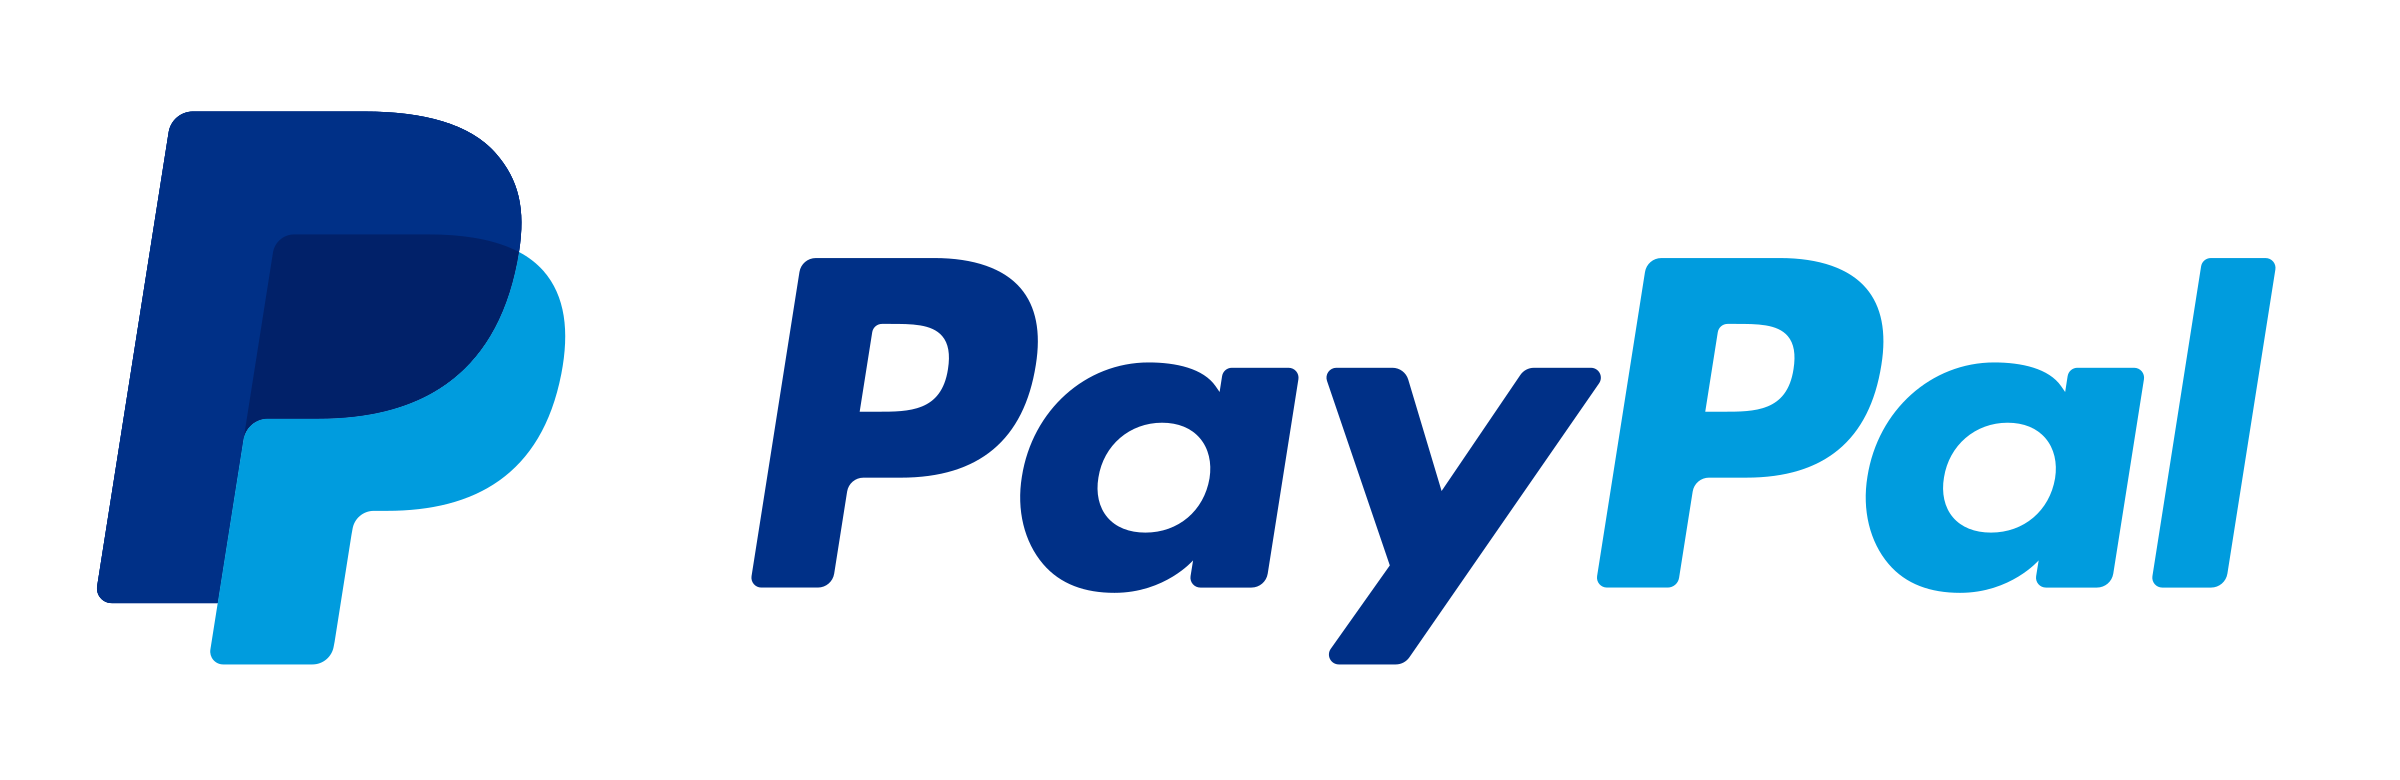 paypal-logo-png-transparent - SBBT